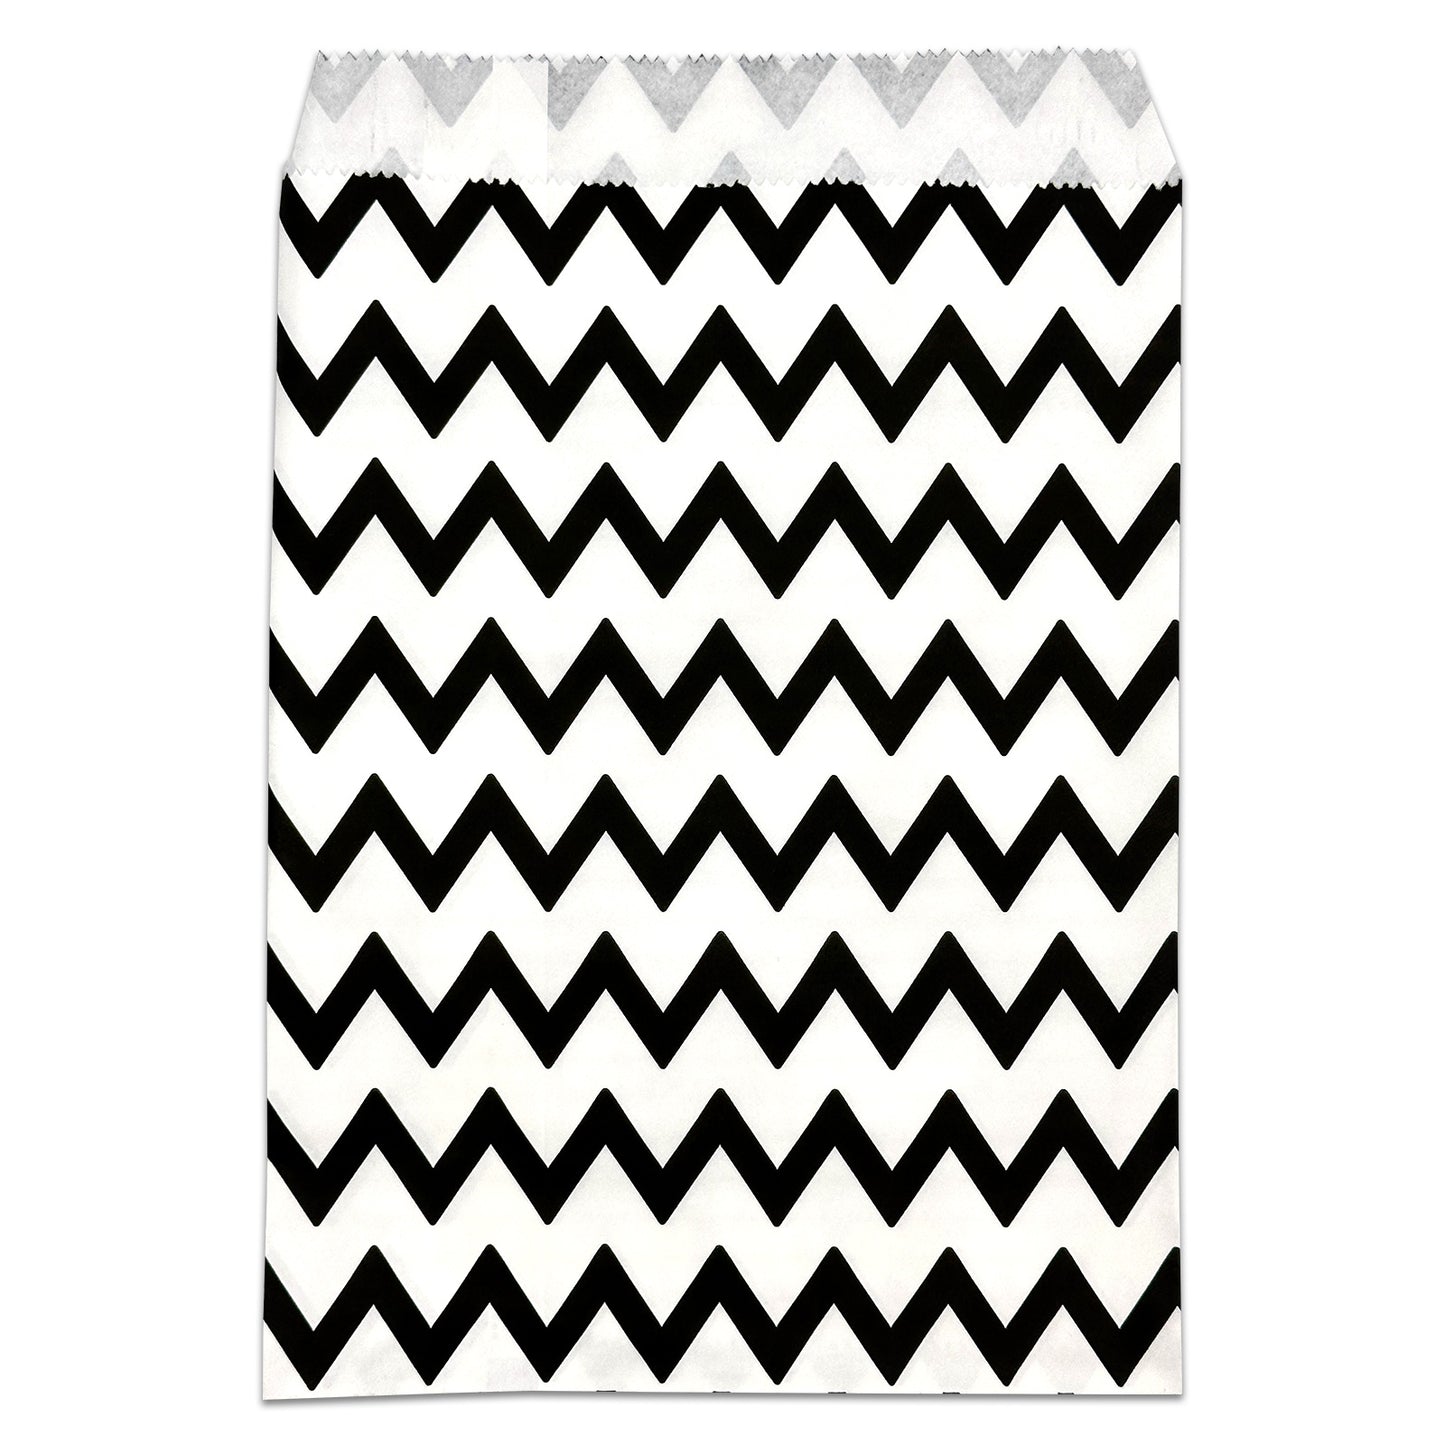 6" x 8 1/2" Black and White Chevron Pattern Flat Paper Gift Shopping Bags